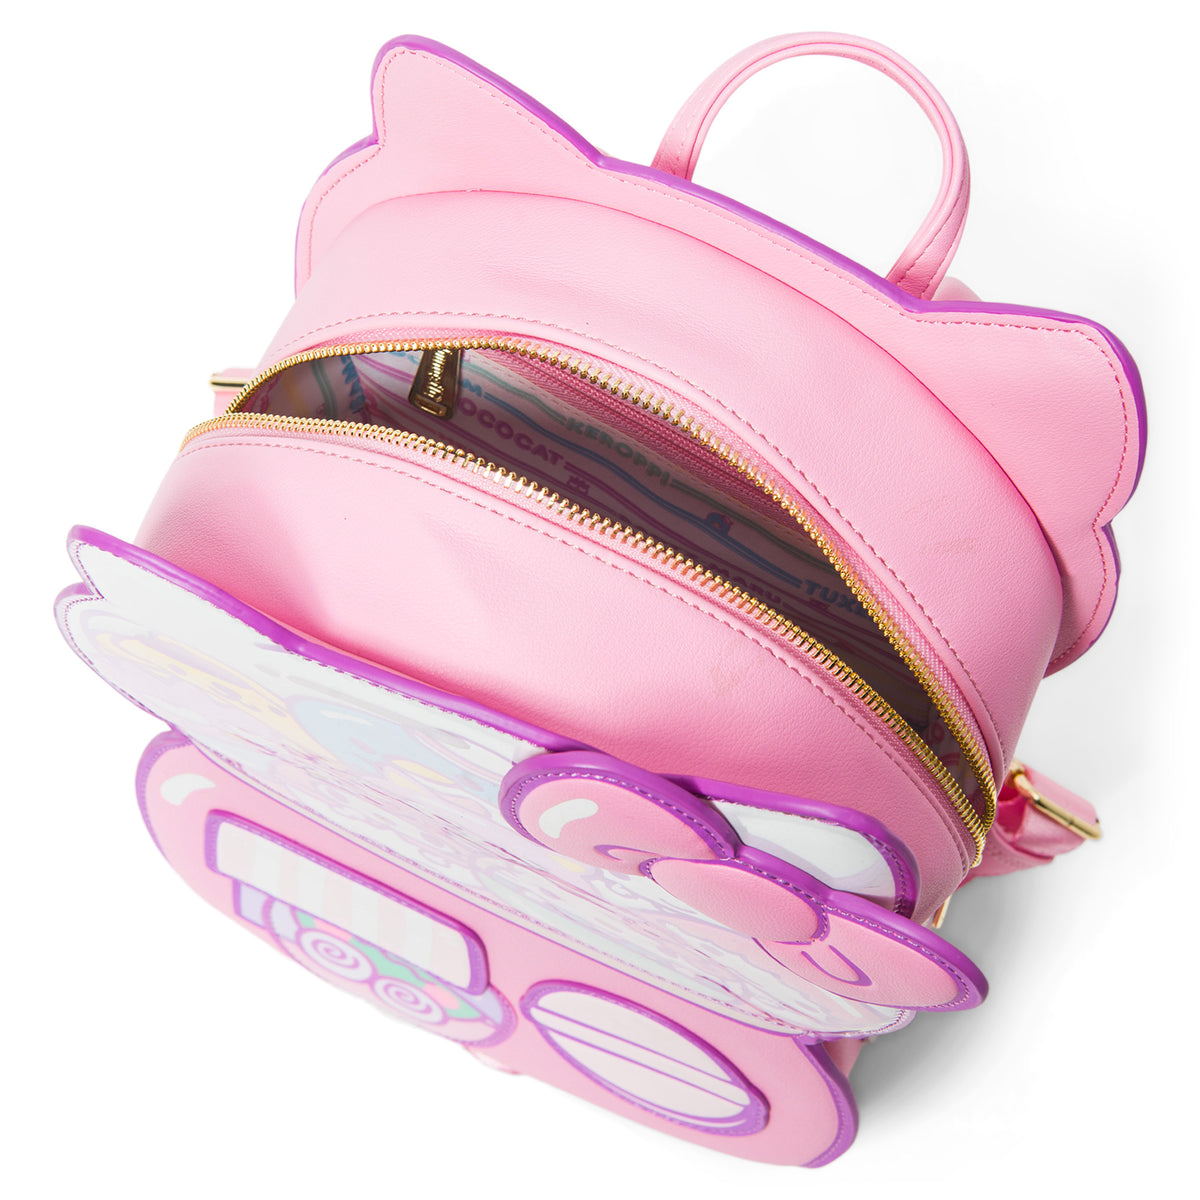 Hello Kitty: Cupcake Loungefly Mini Backpack